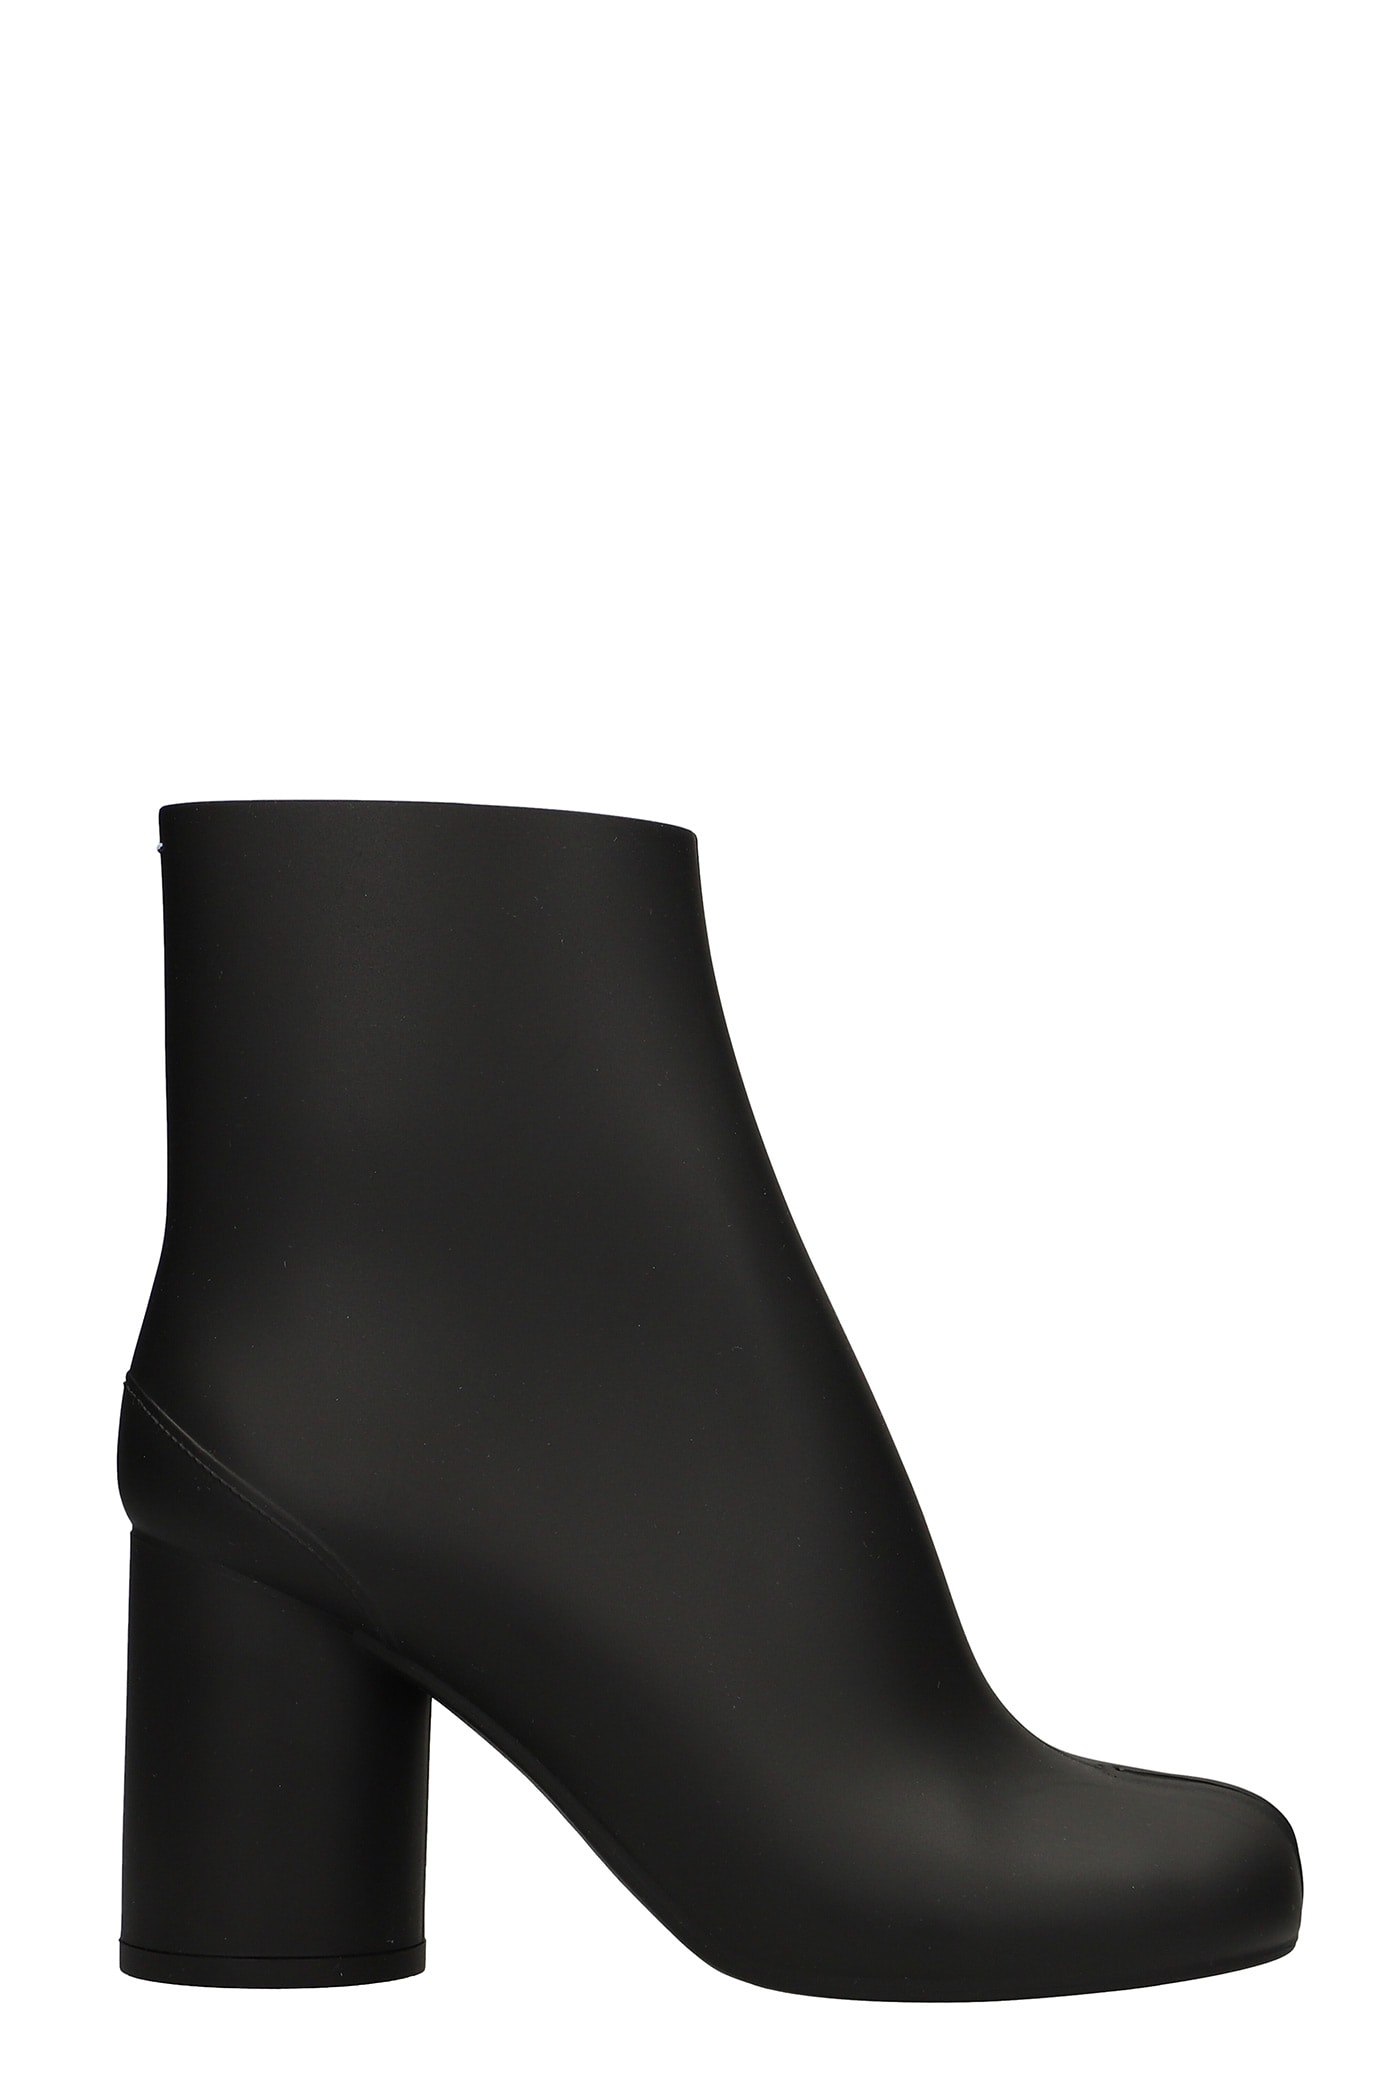 Maison Margiela High Heels Ankle Boots In Black Pvc